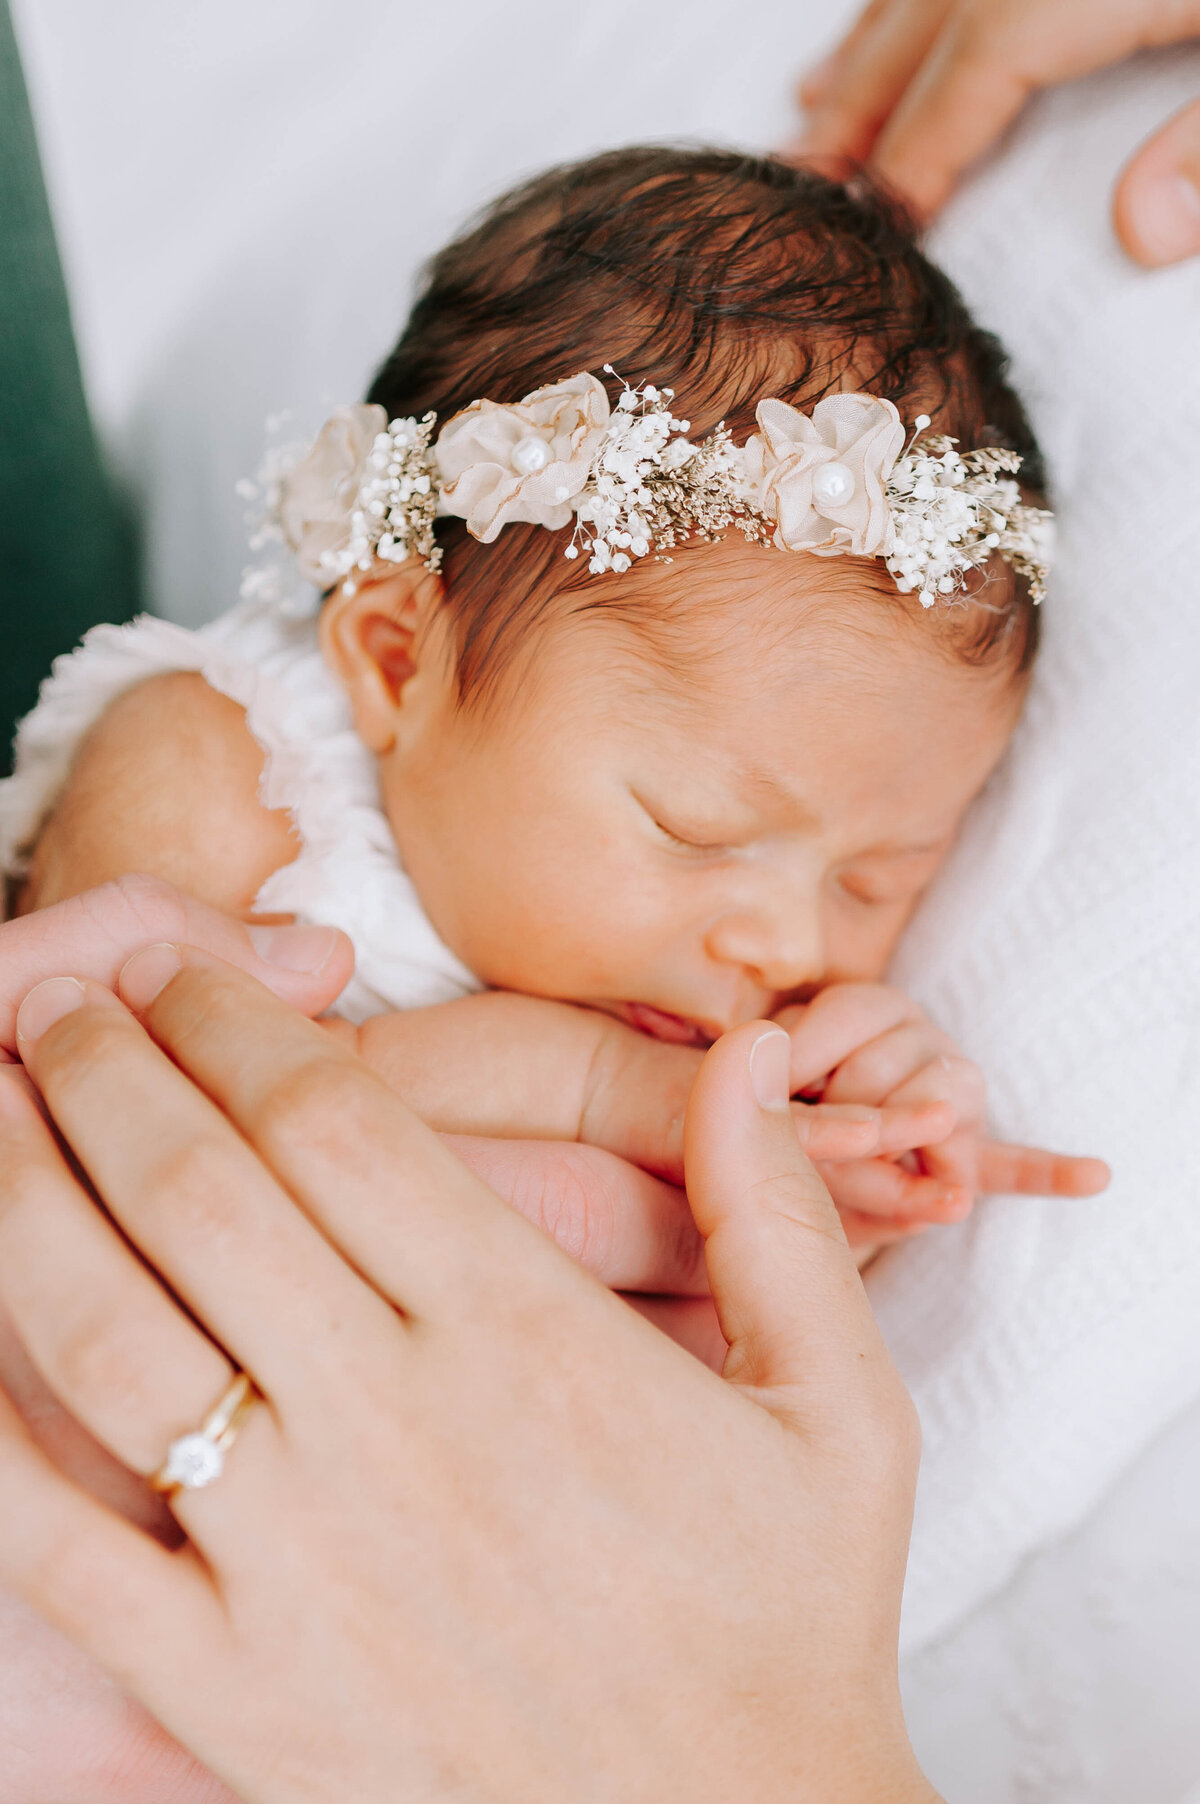 Springfield MO newborn photographer captures newborn baby girl with parents hands